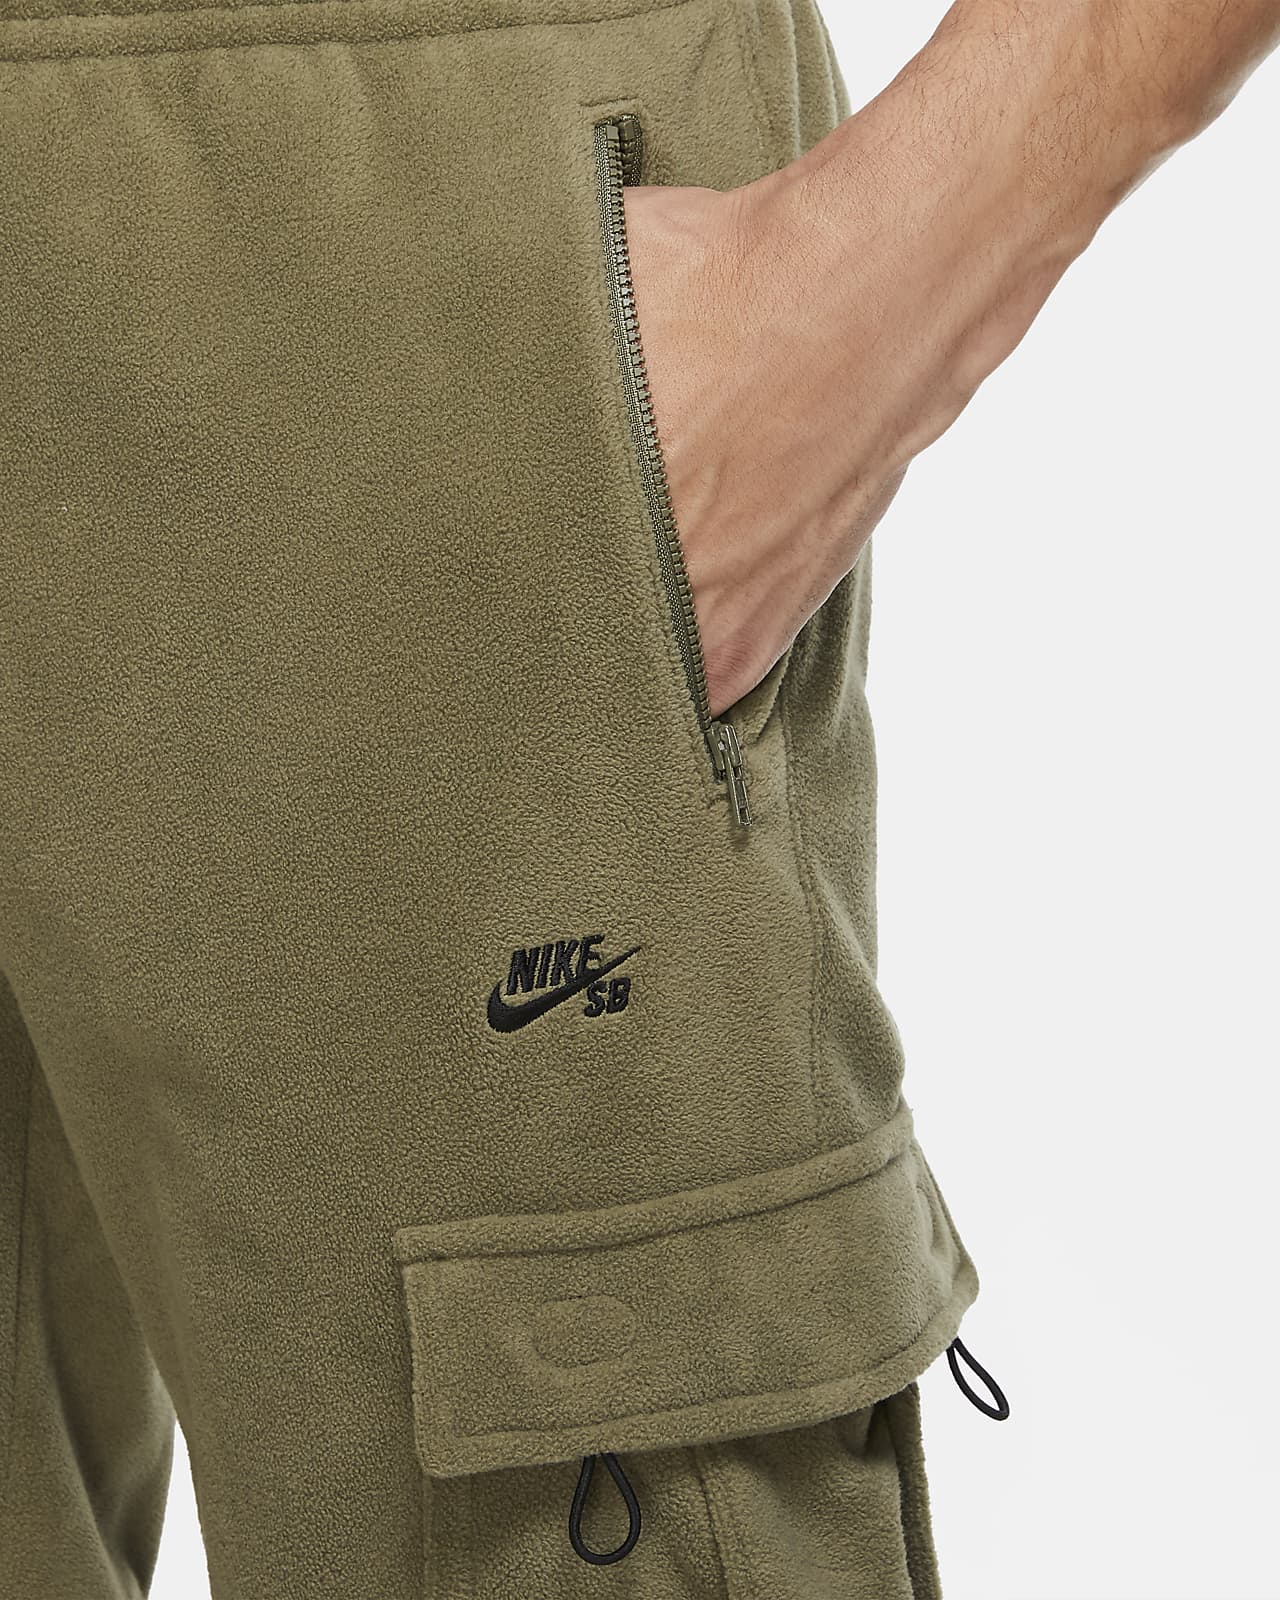 Nike SB Cargo Pants. Nike.com